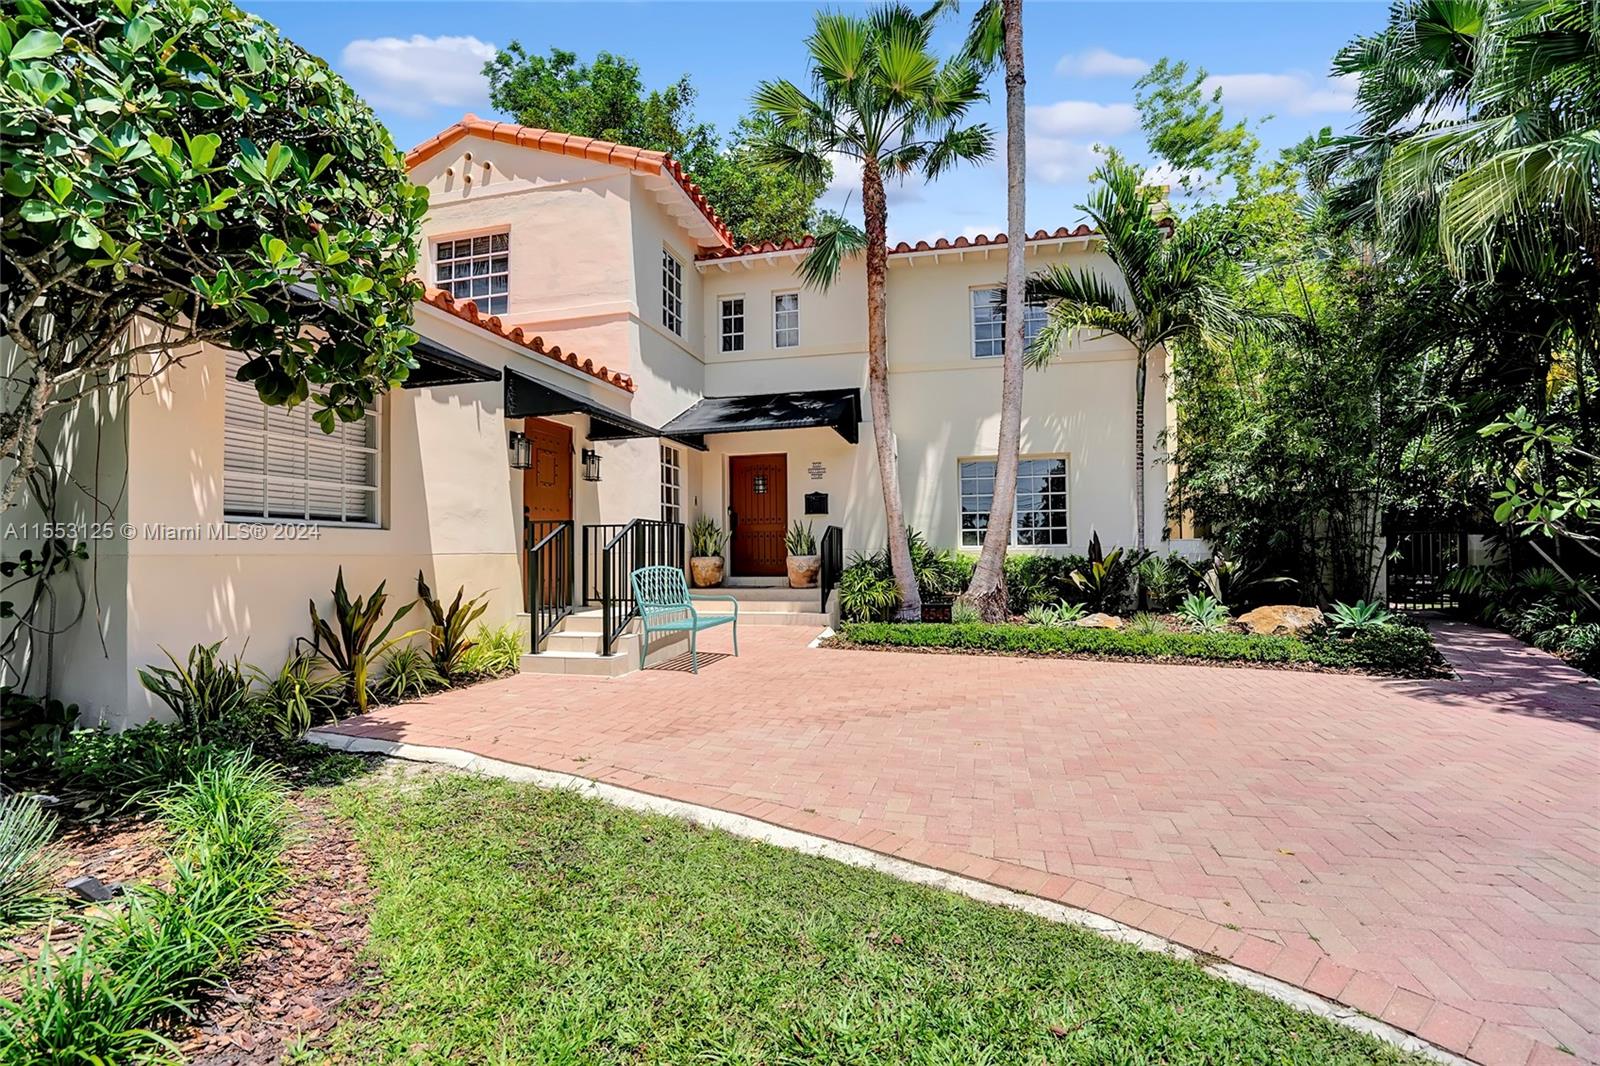 Property for Sale at 4545 Nautilus Ct Ct, Miami Beach, Miami-Dade County, Florida - Bedrooms: 5 
Bathrooms: 5  - $3,950,000